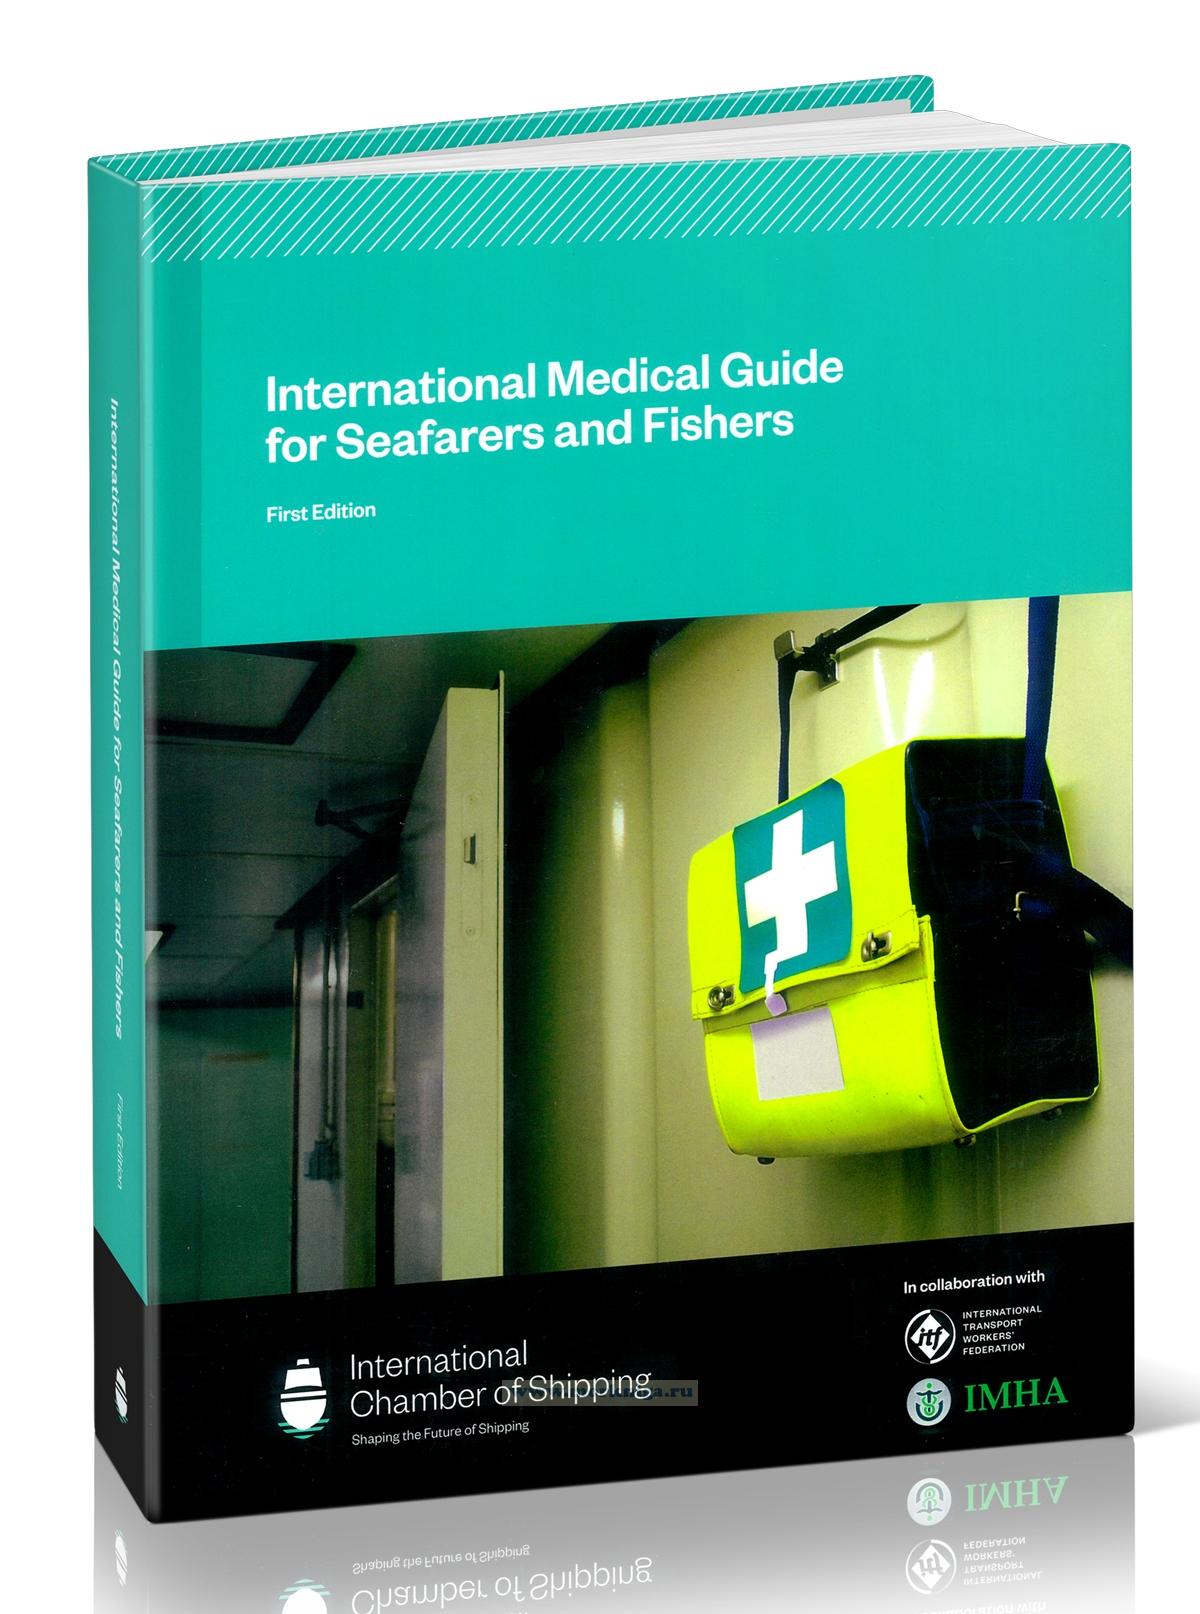 International Medical Guide for Seafarers and Fishers/Международный медицинский справочник для моряков и рыбаков